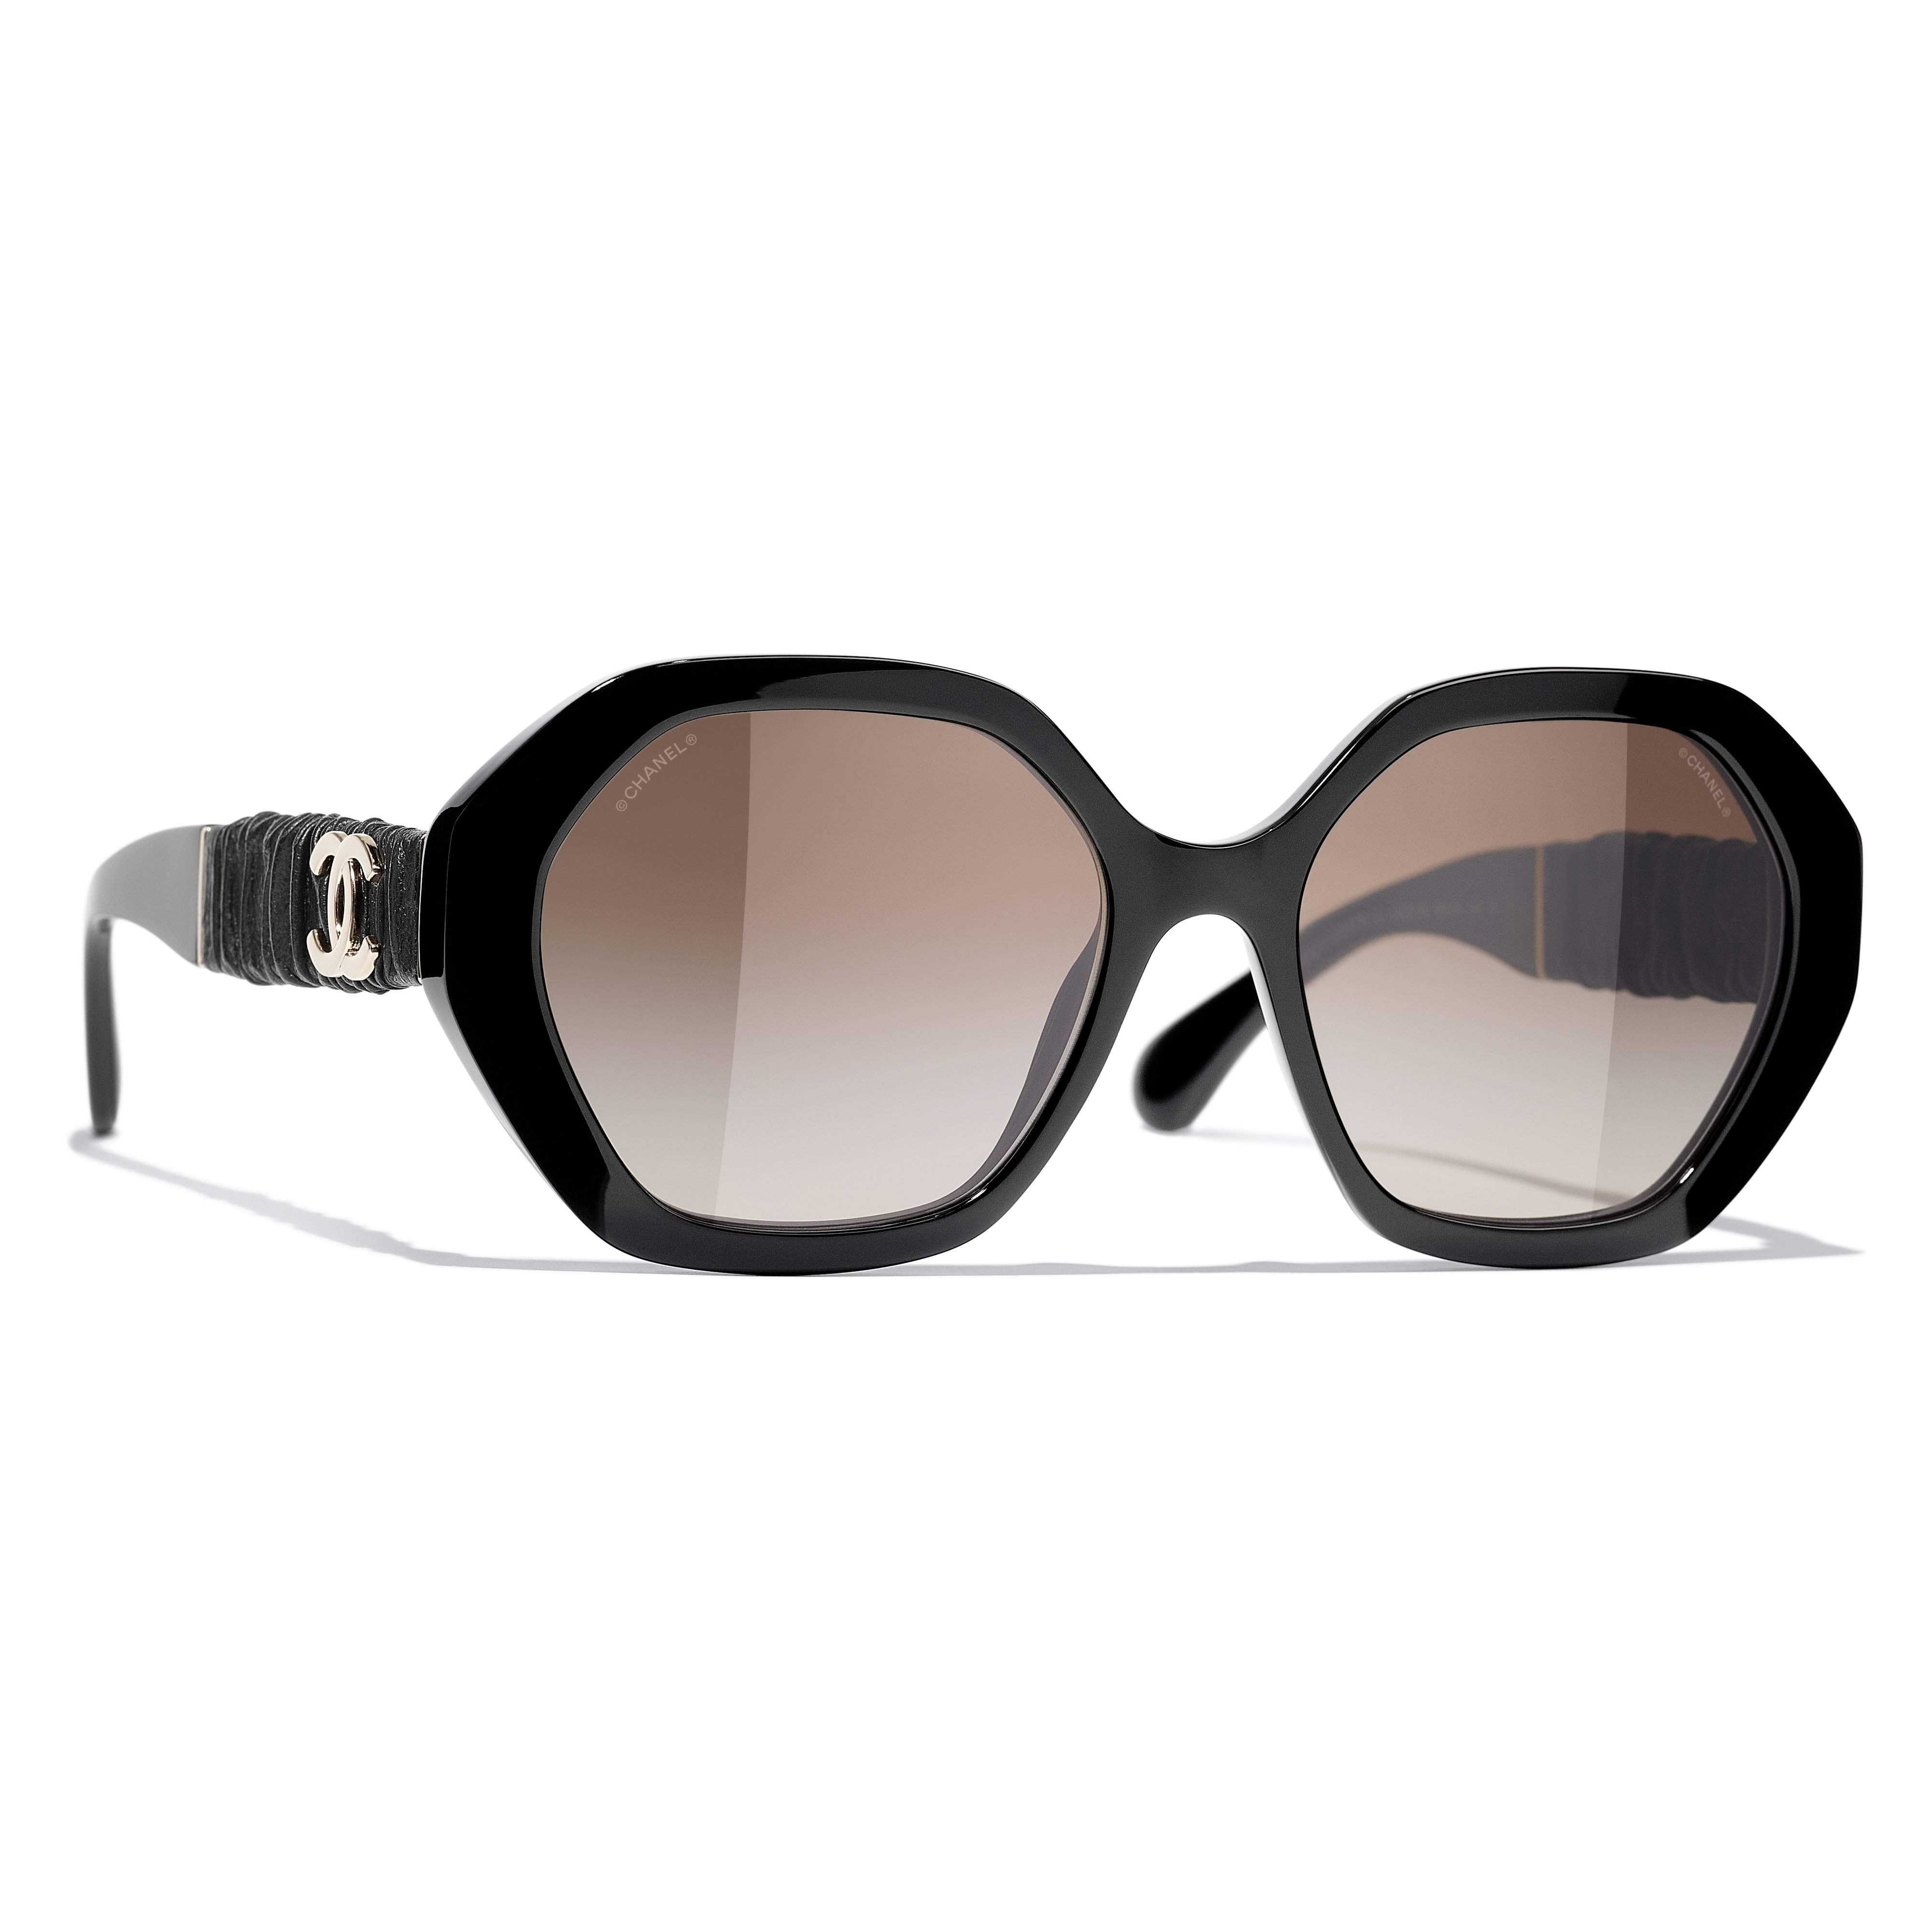 Cara Delevingne models Chanel SS16 Eyewear Collection  Fashion  Lifestyle   SelectSpecscom